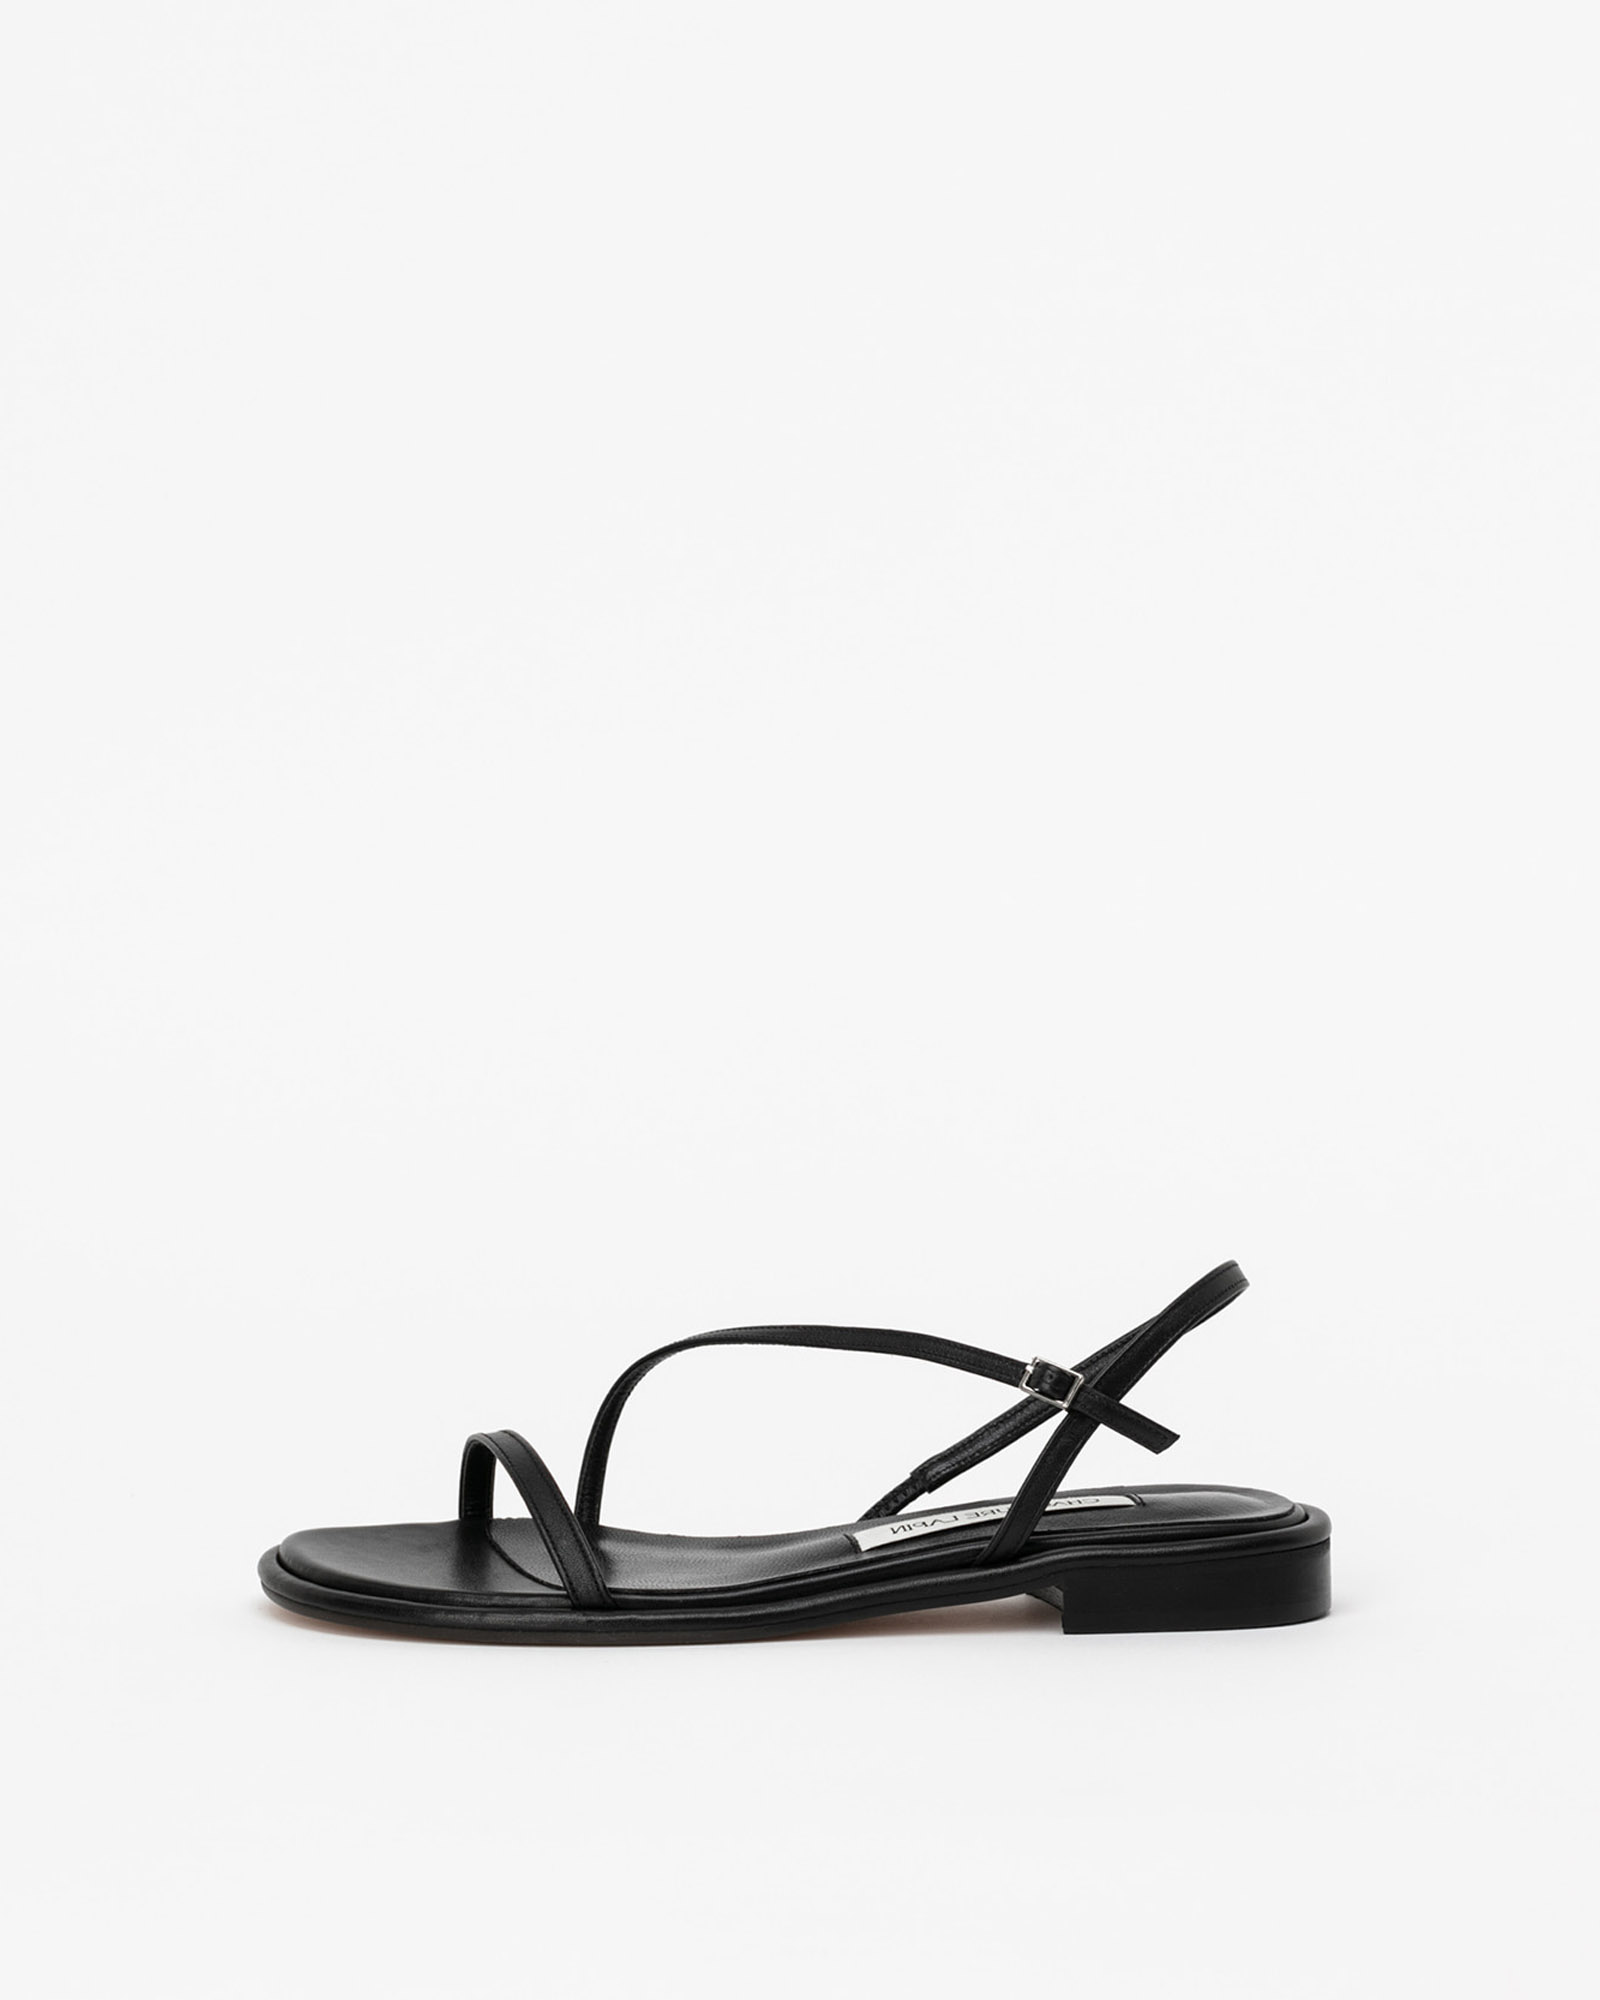 Sephilia Strappy Flat Sandals in Regular Black